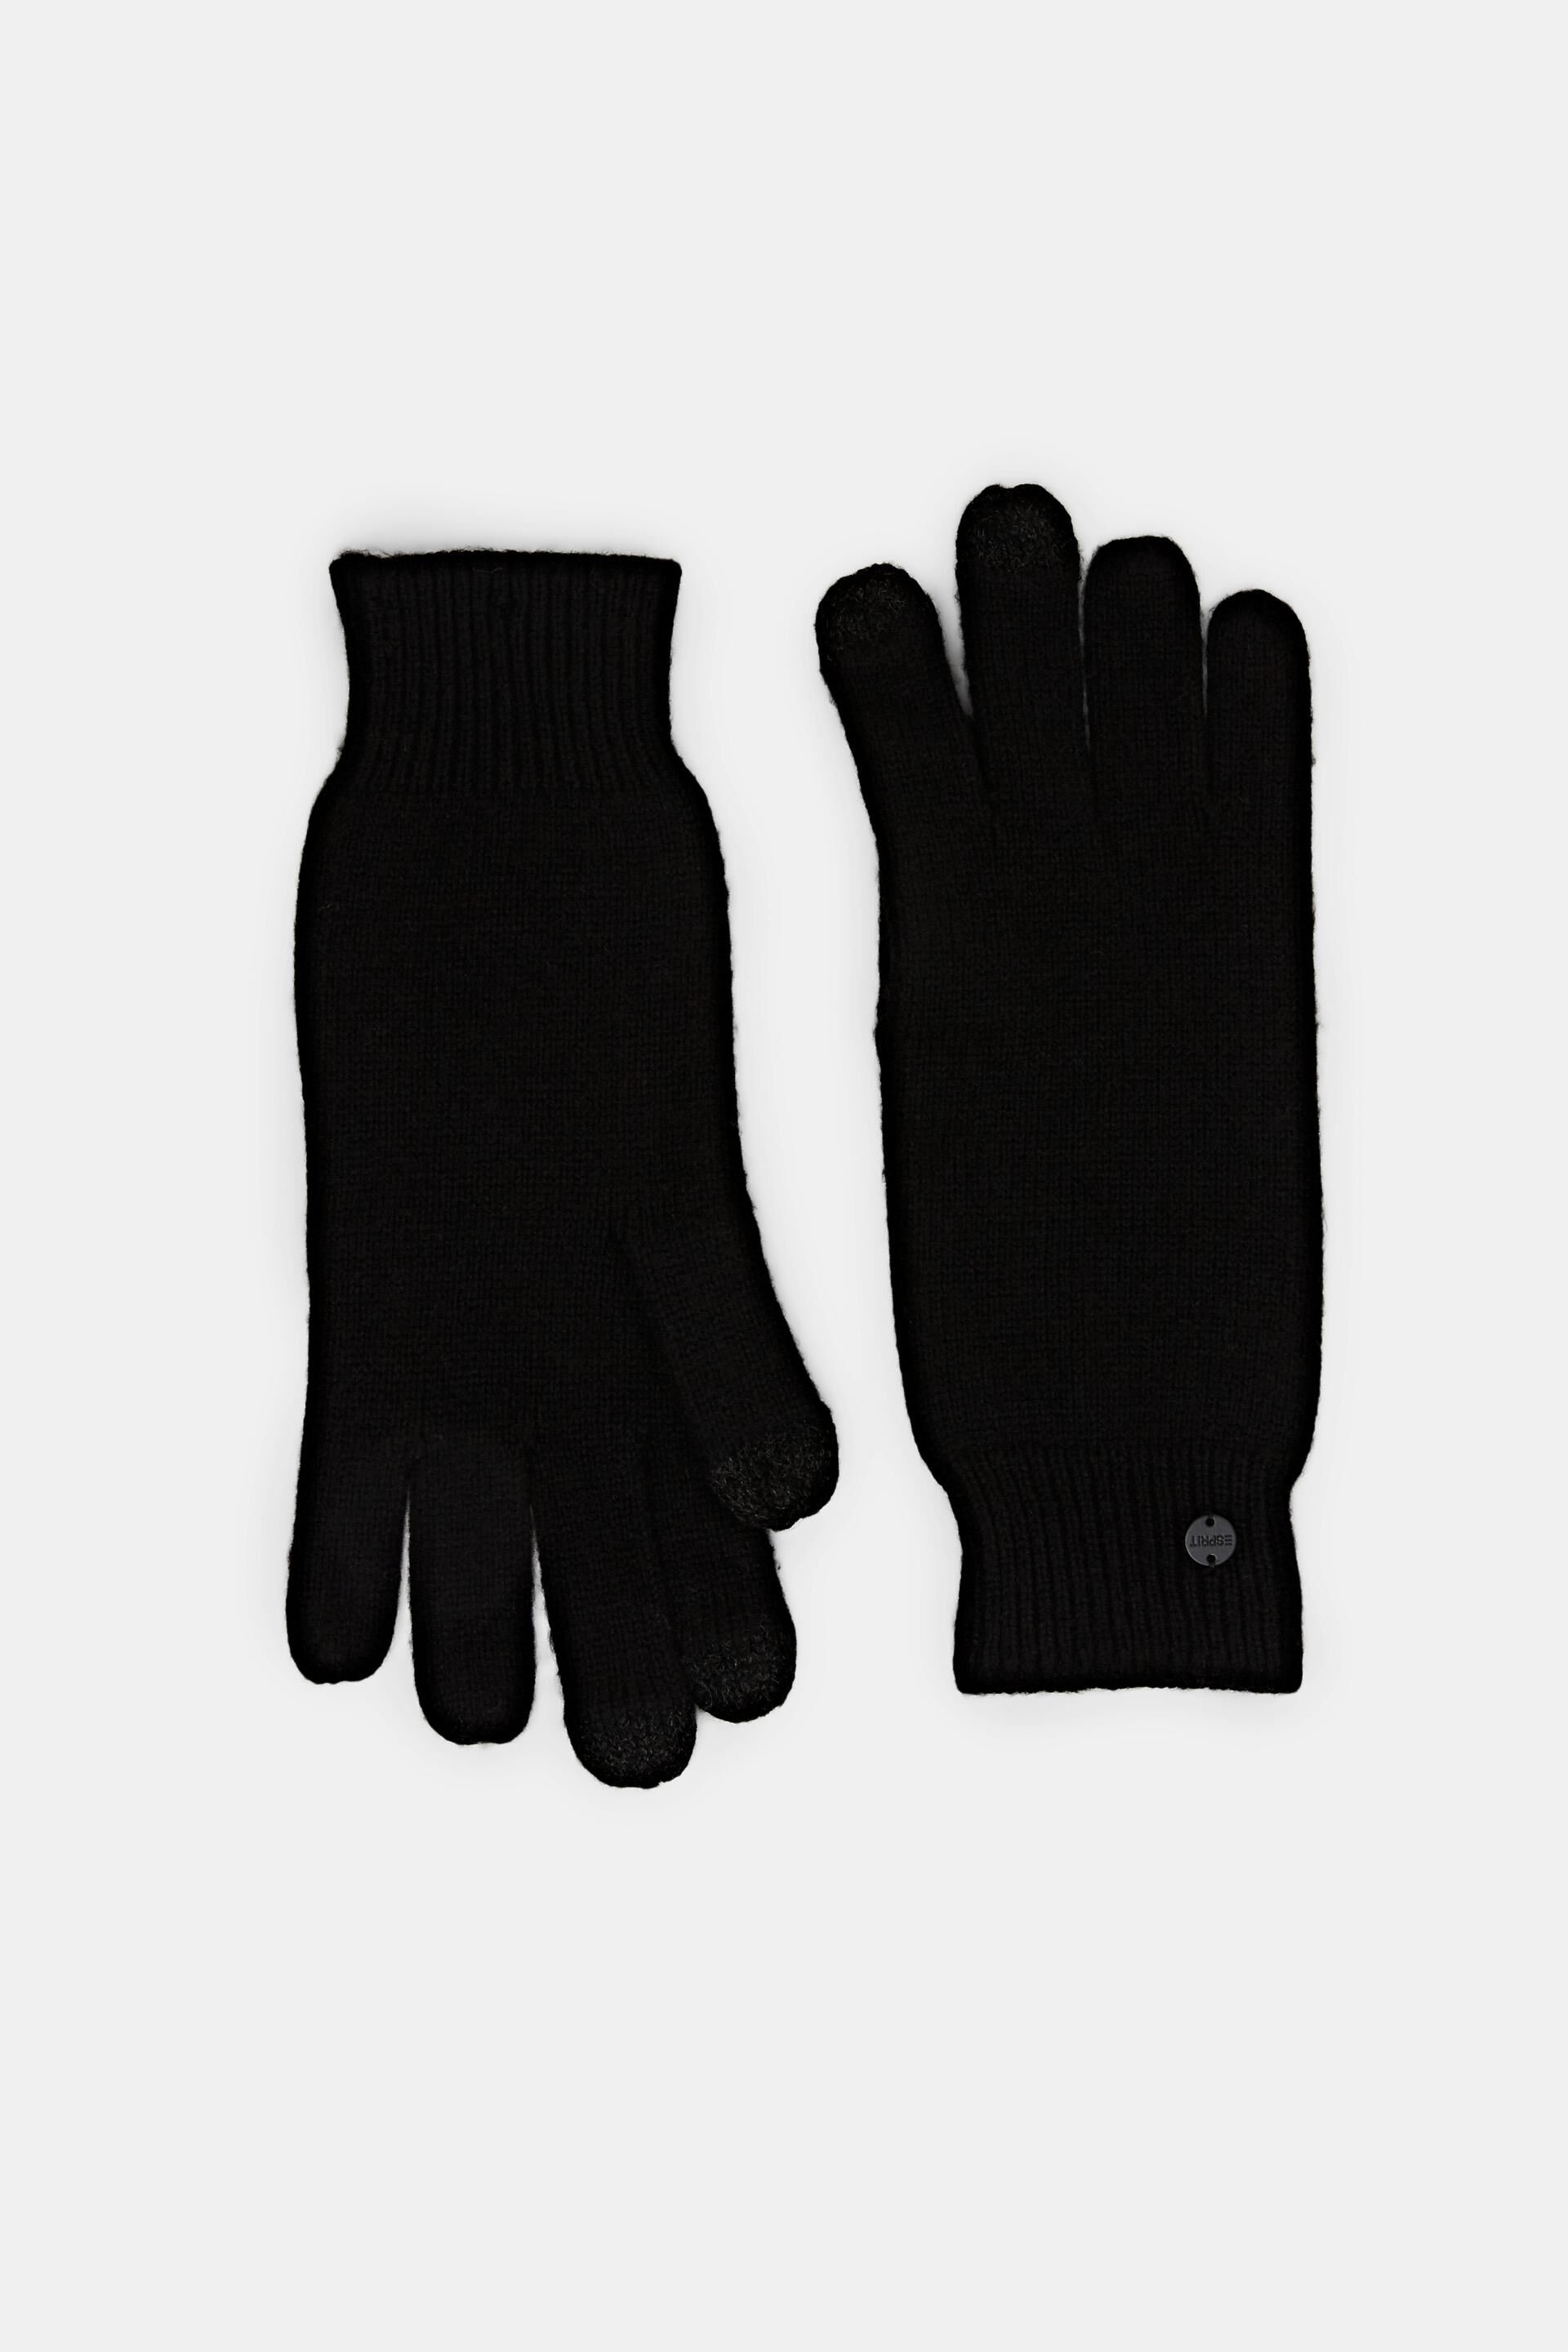 Esprit Gloves non-leather